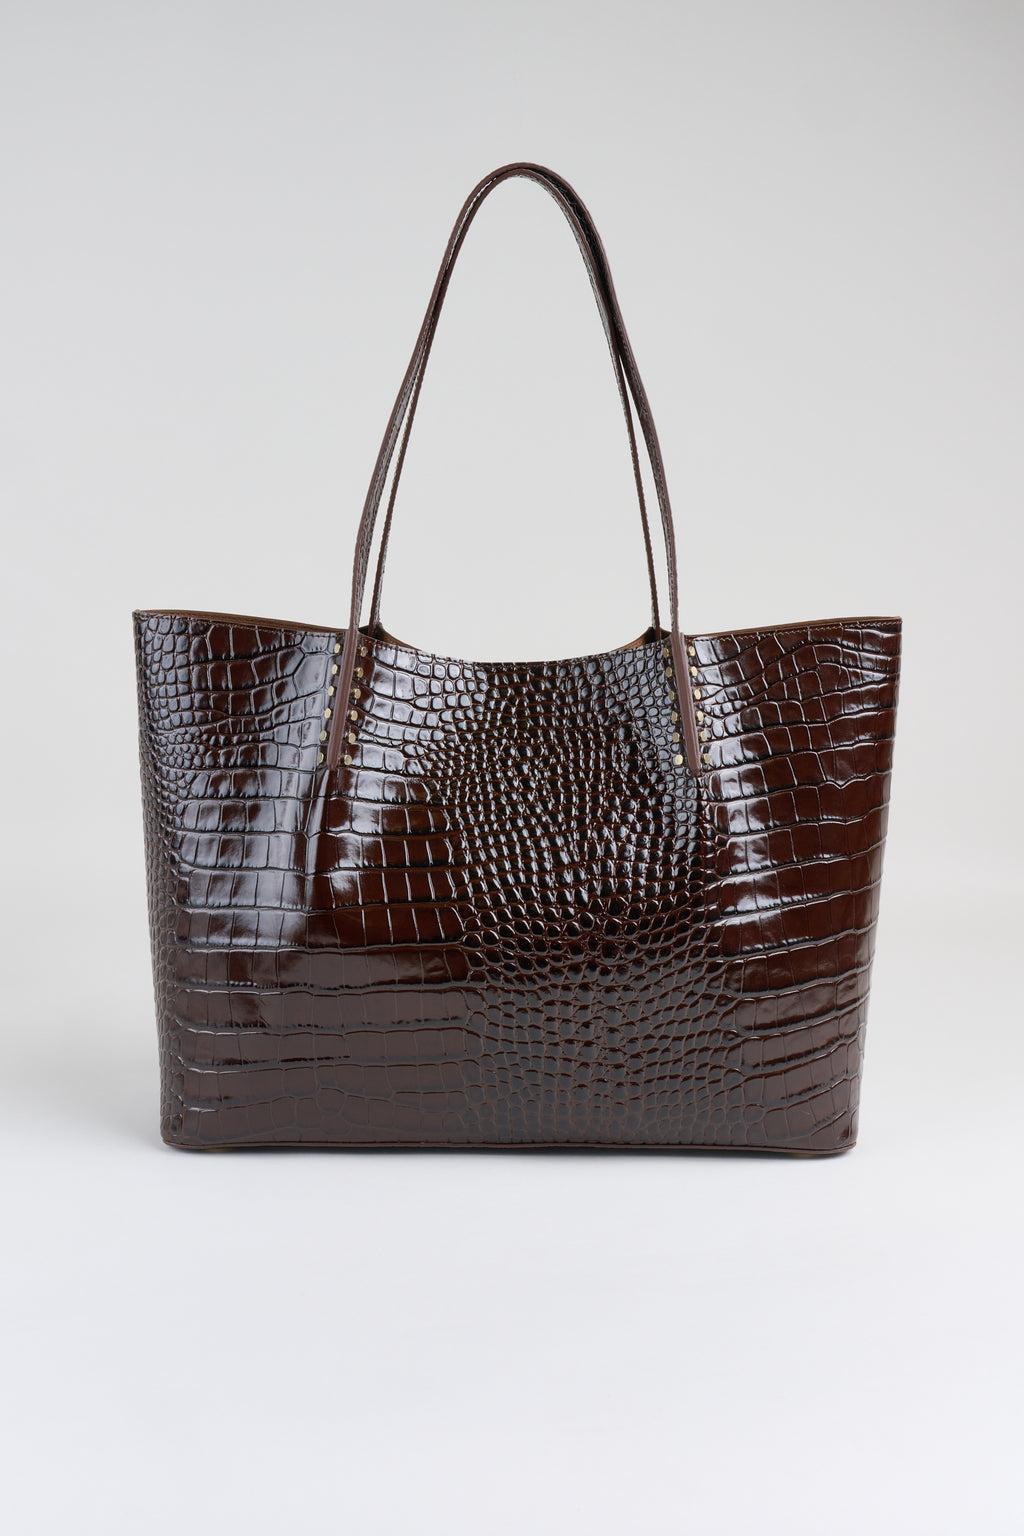  Korean made caiman crocodile tote bag for women (blue